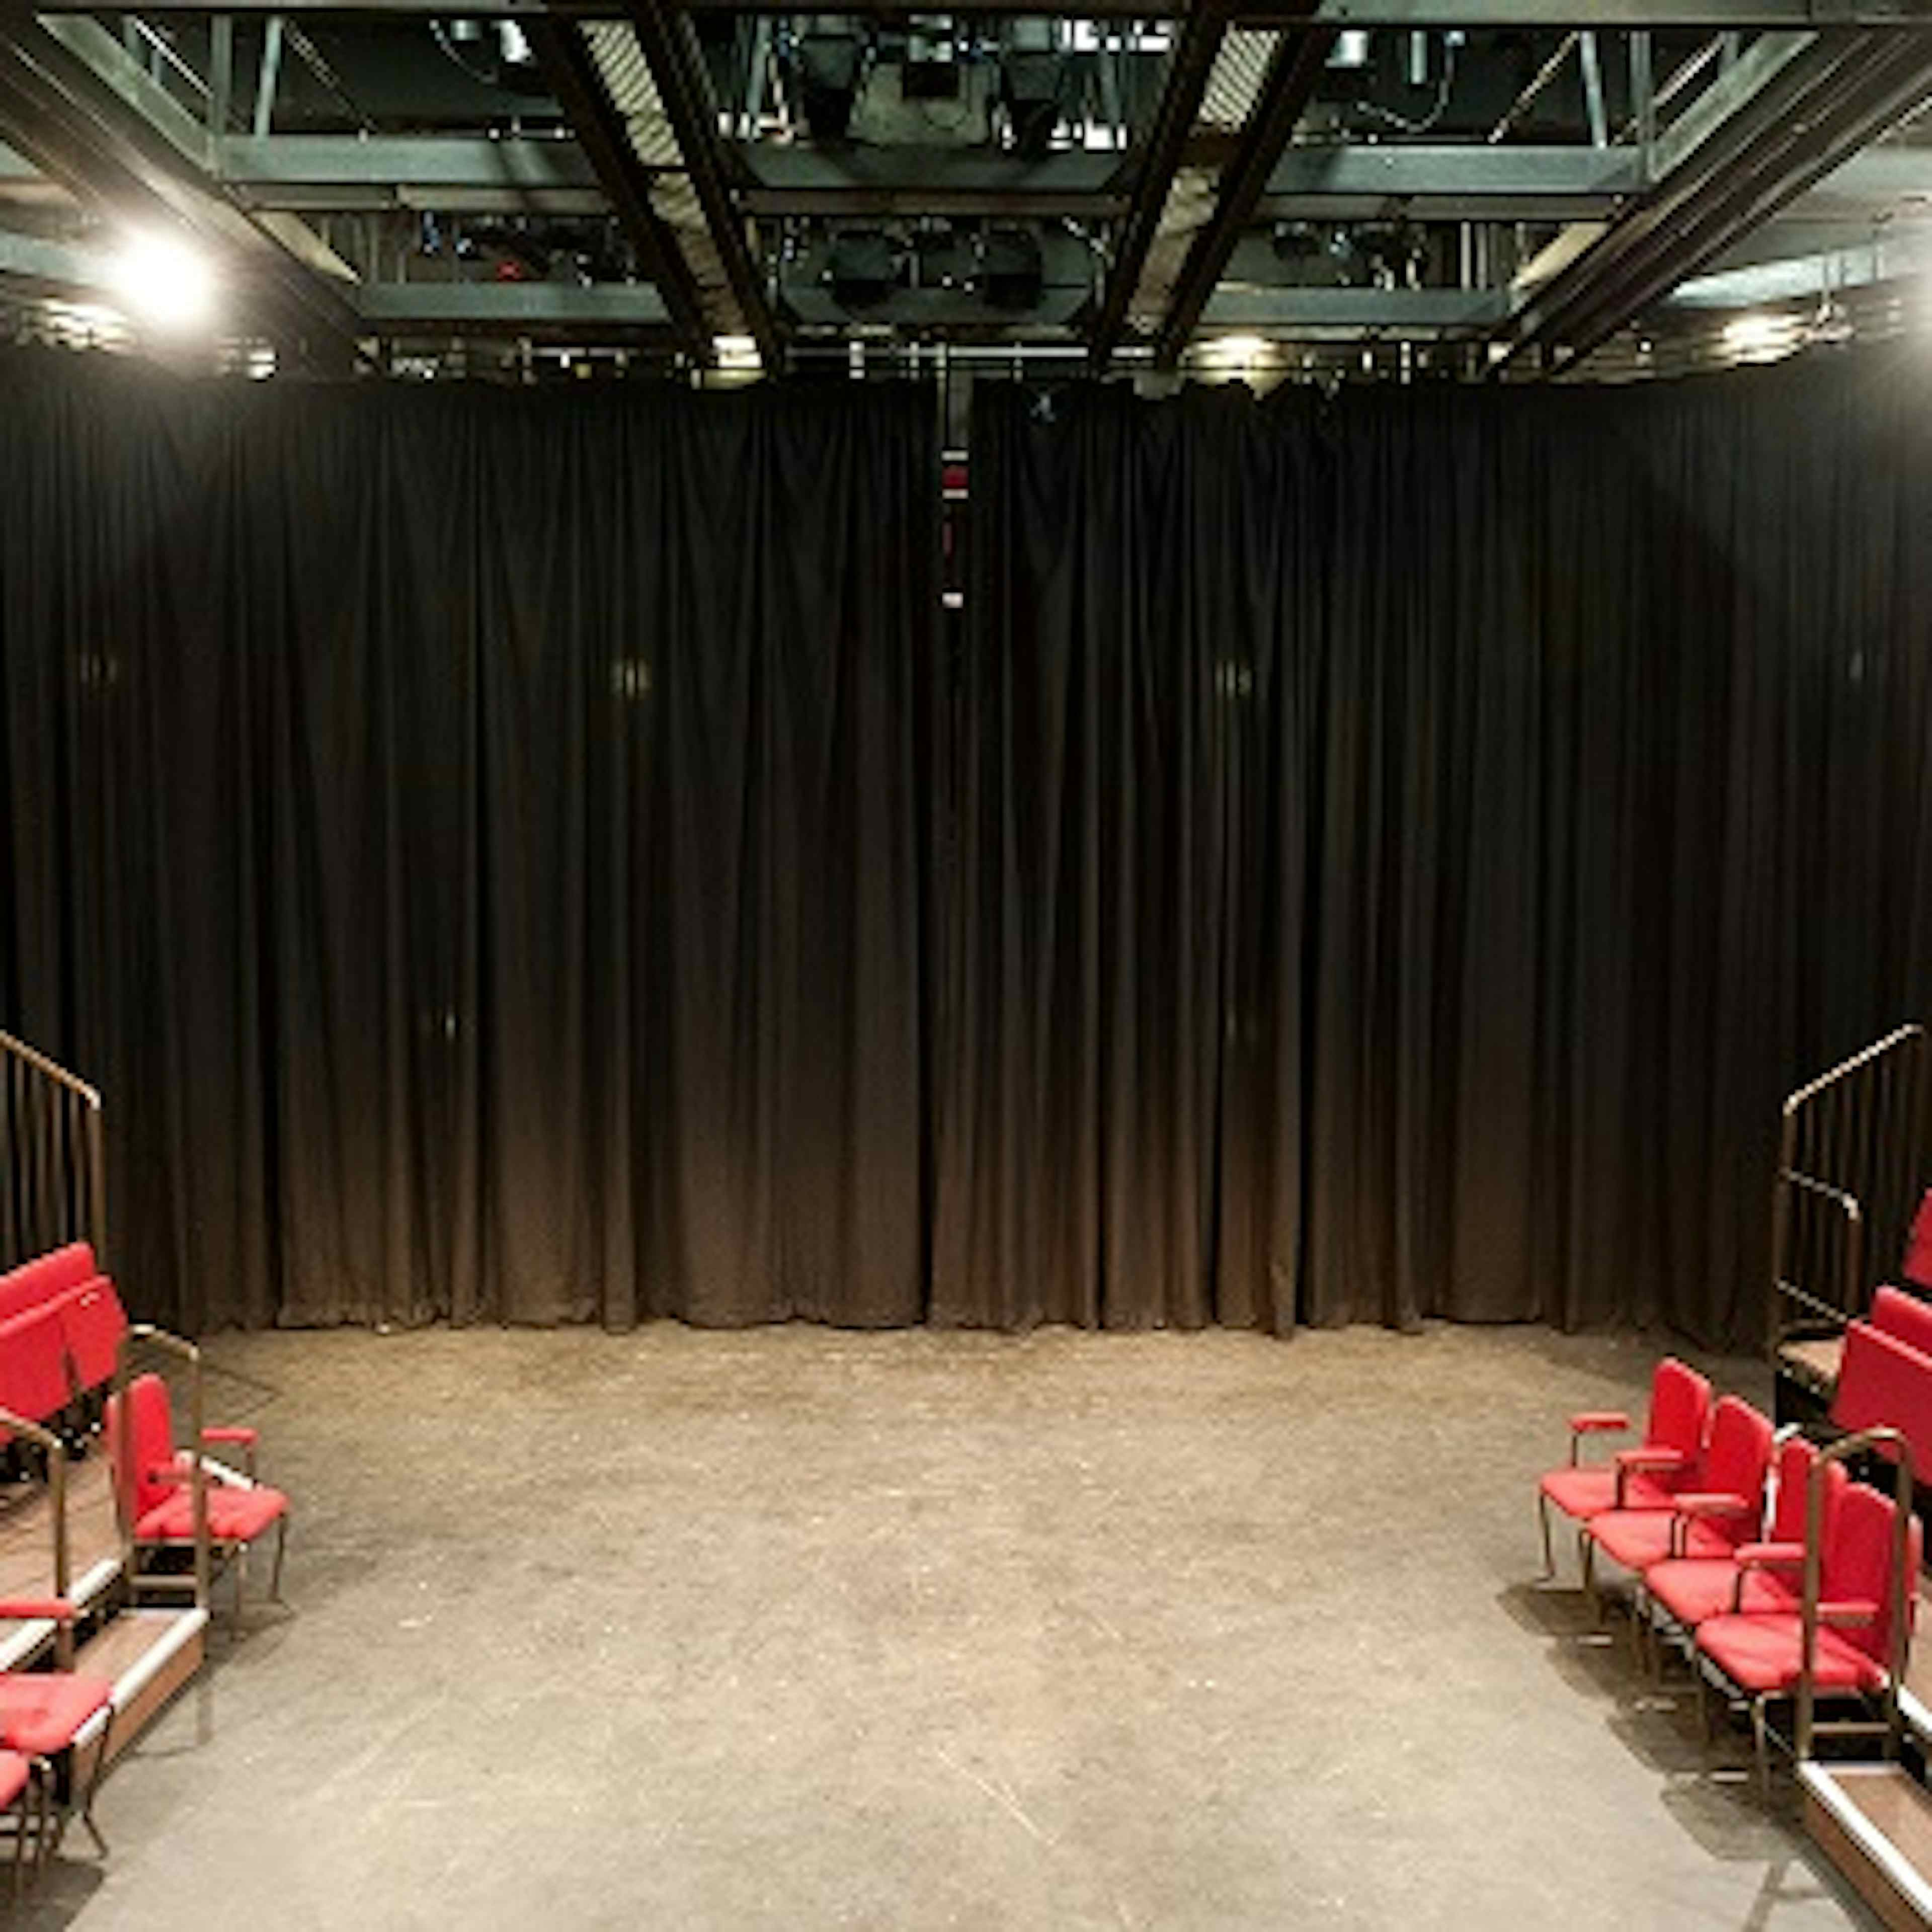 Crucible Theatre - Playhouse image 2